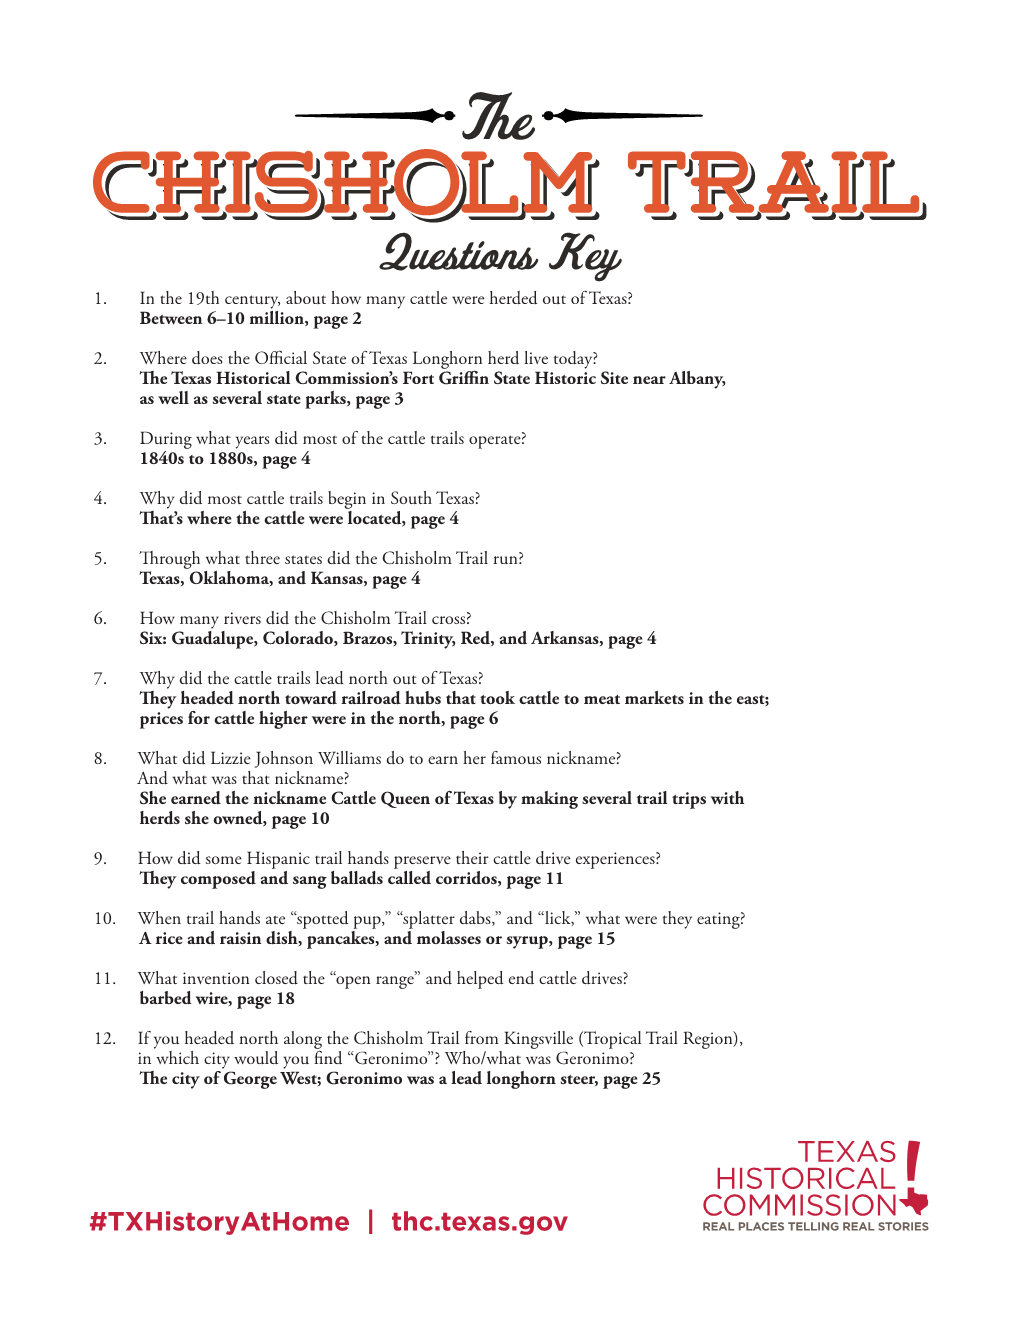 Chisholm Trail Run? Texas, Oklahoma, and Kansas, Page 4